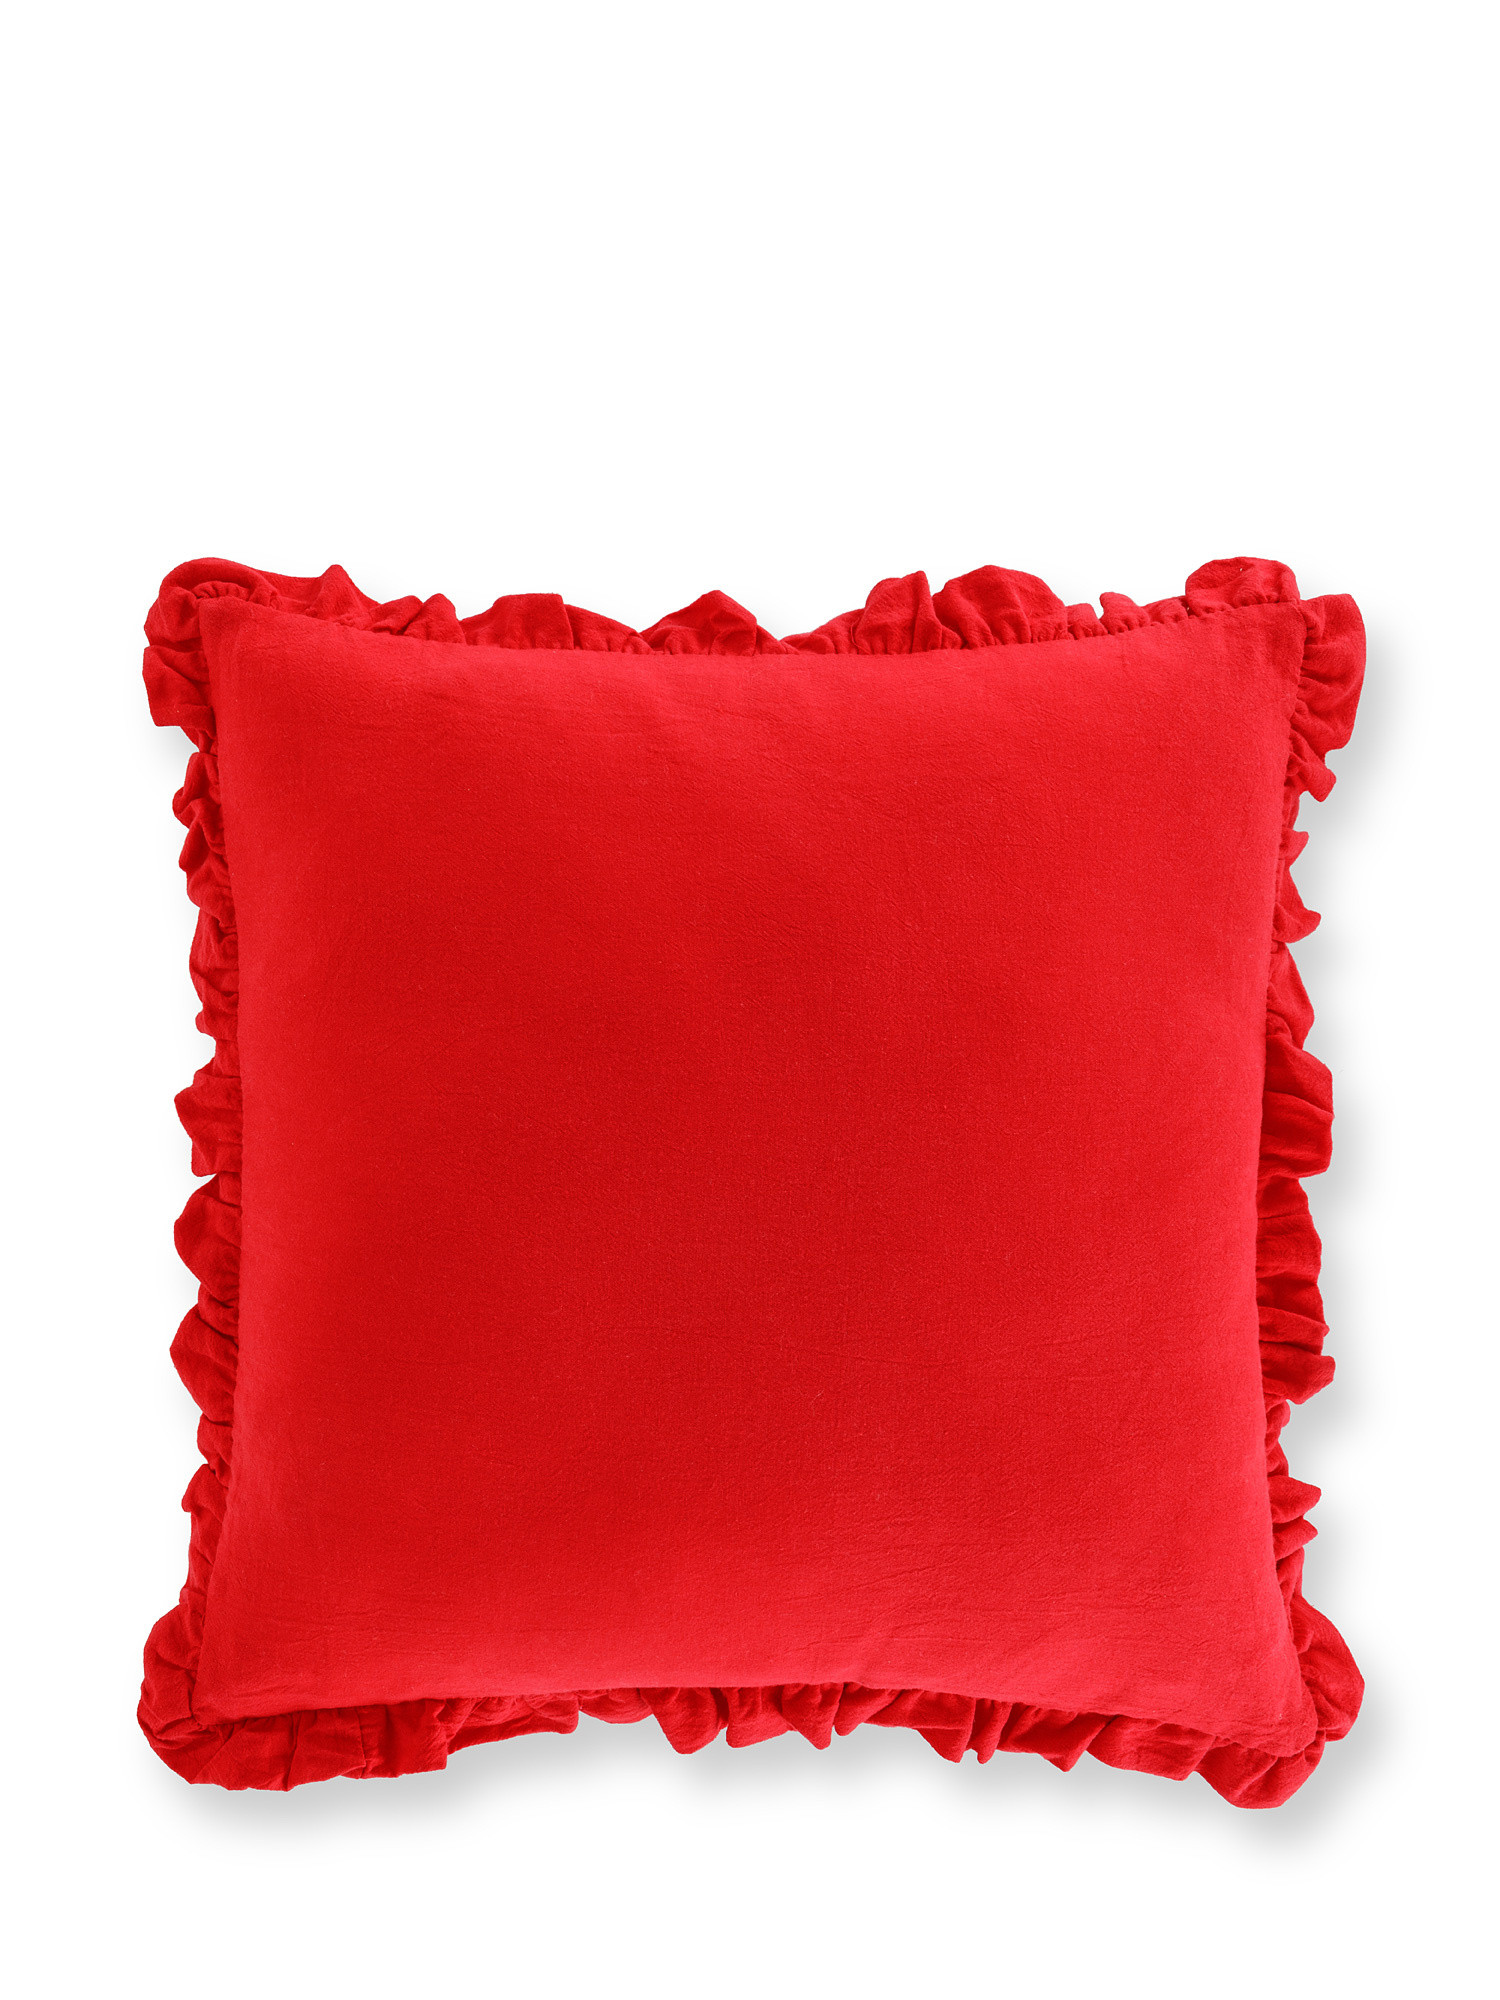 Cuscino cotone con volant 45x45cm, Rosso, large image number 0